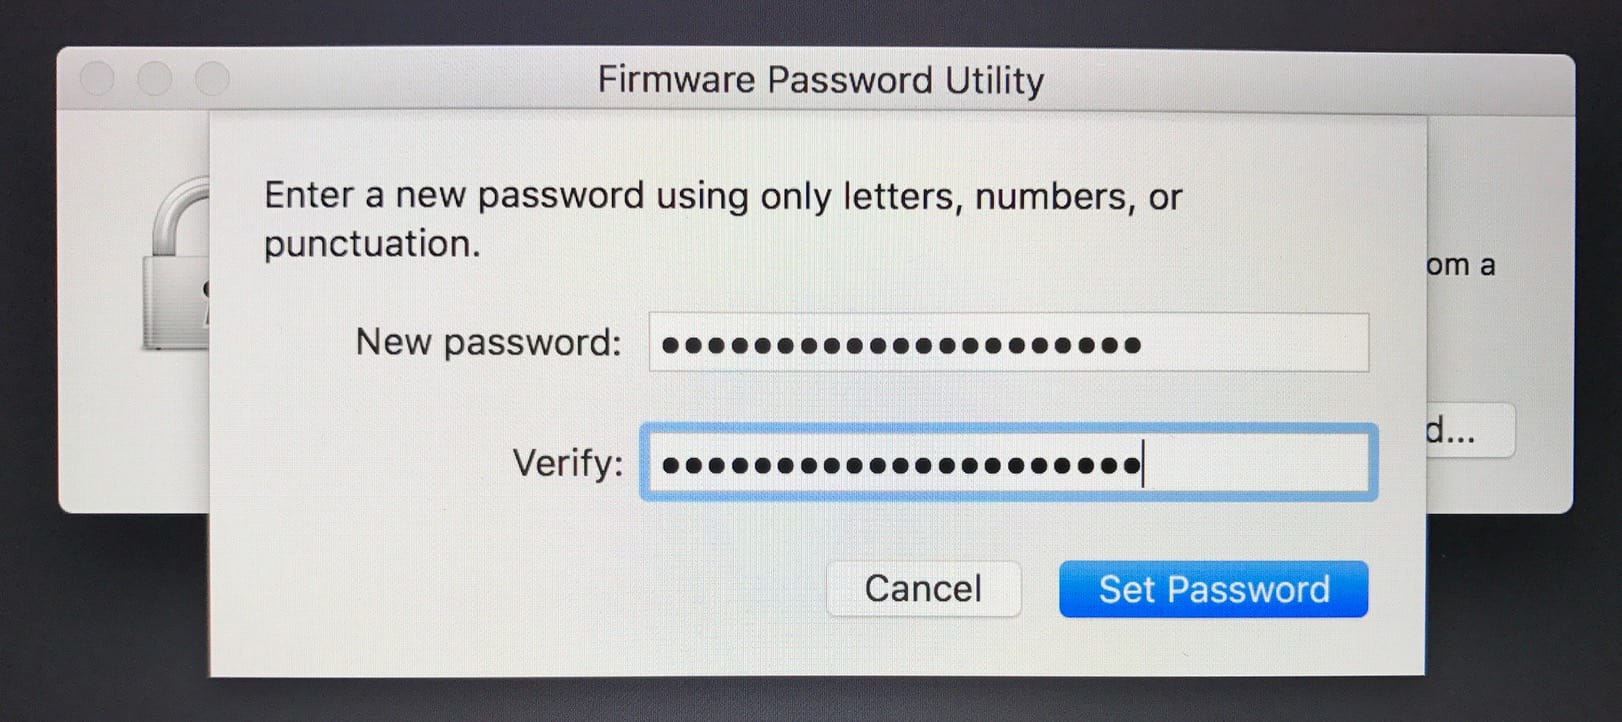 The Mac Firmware Password UtilityEnter Password makes you enter a new password